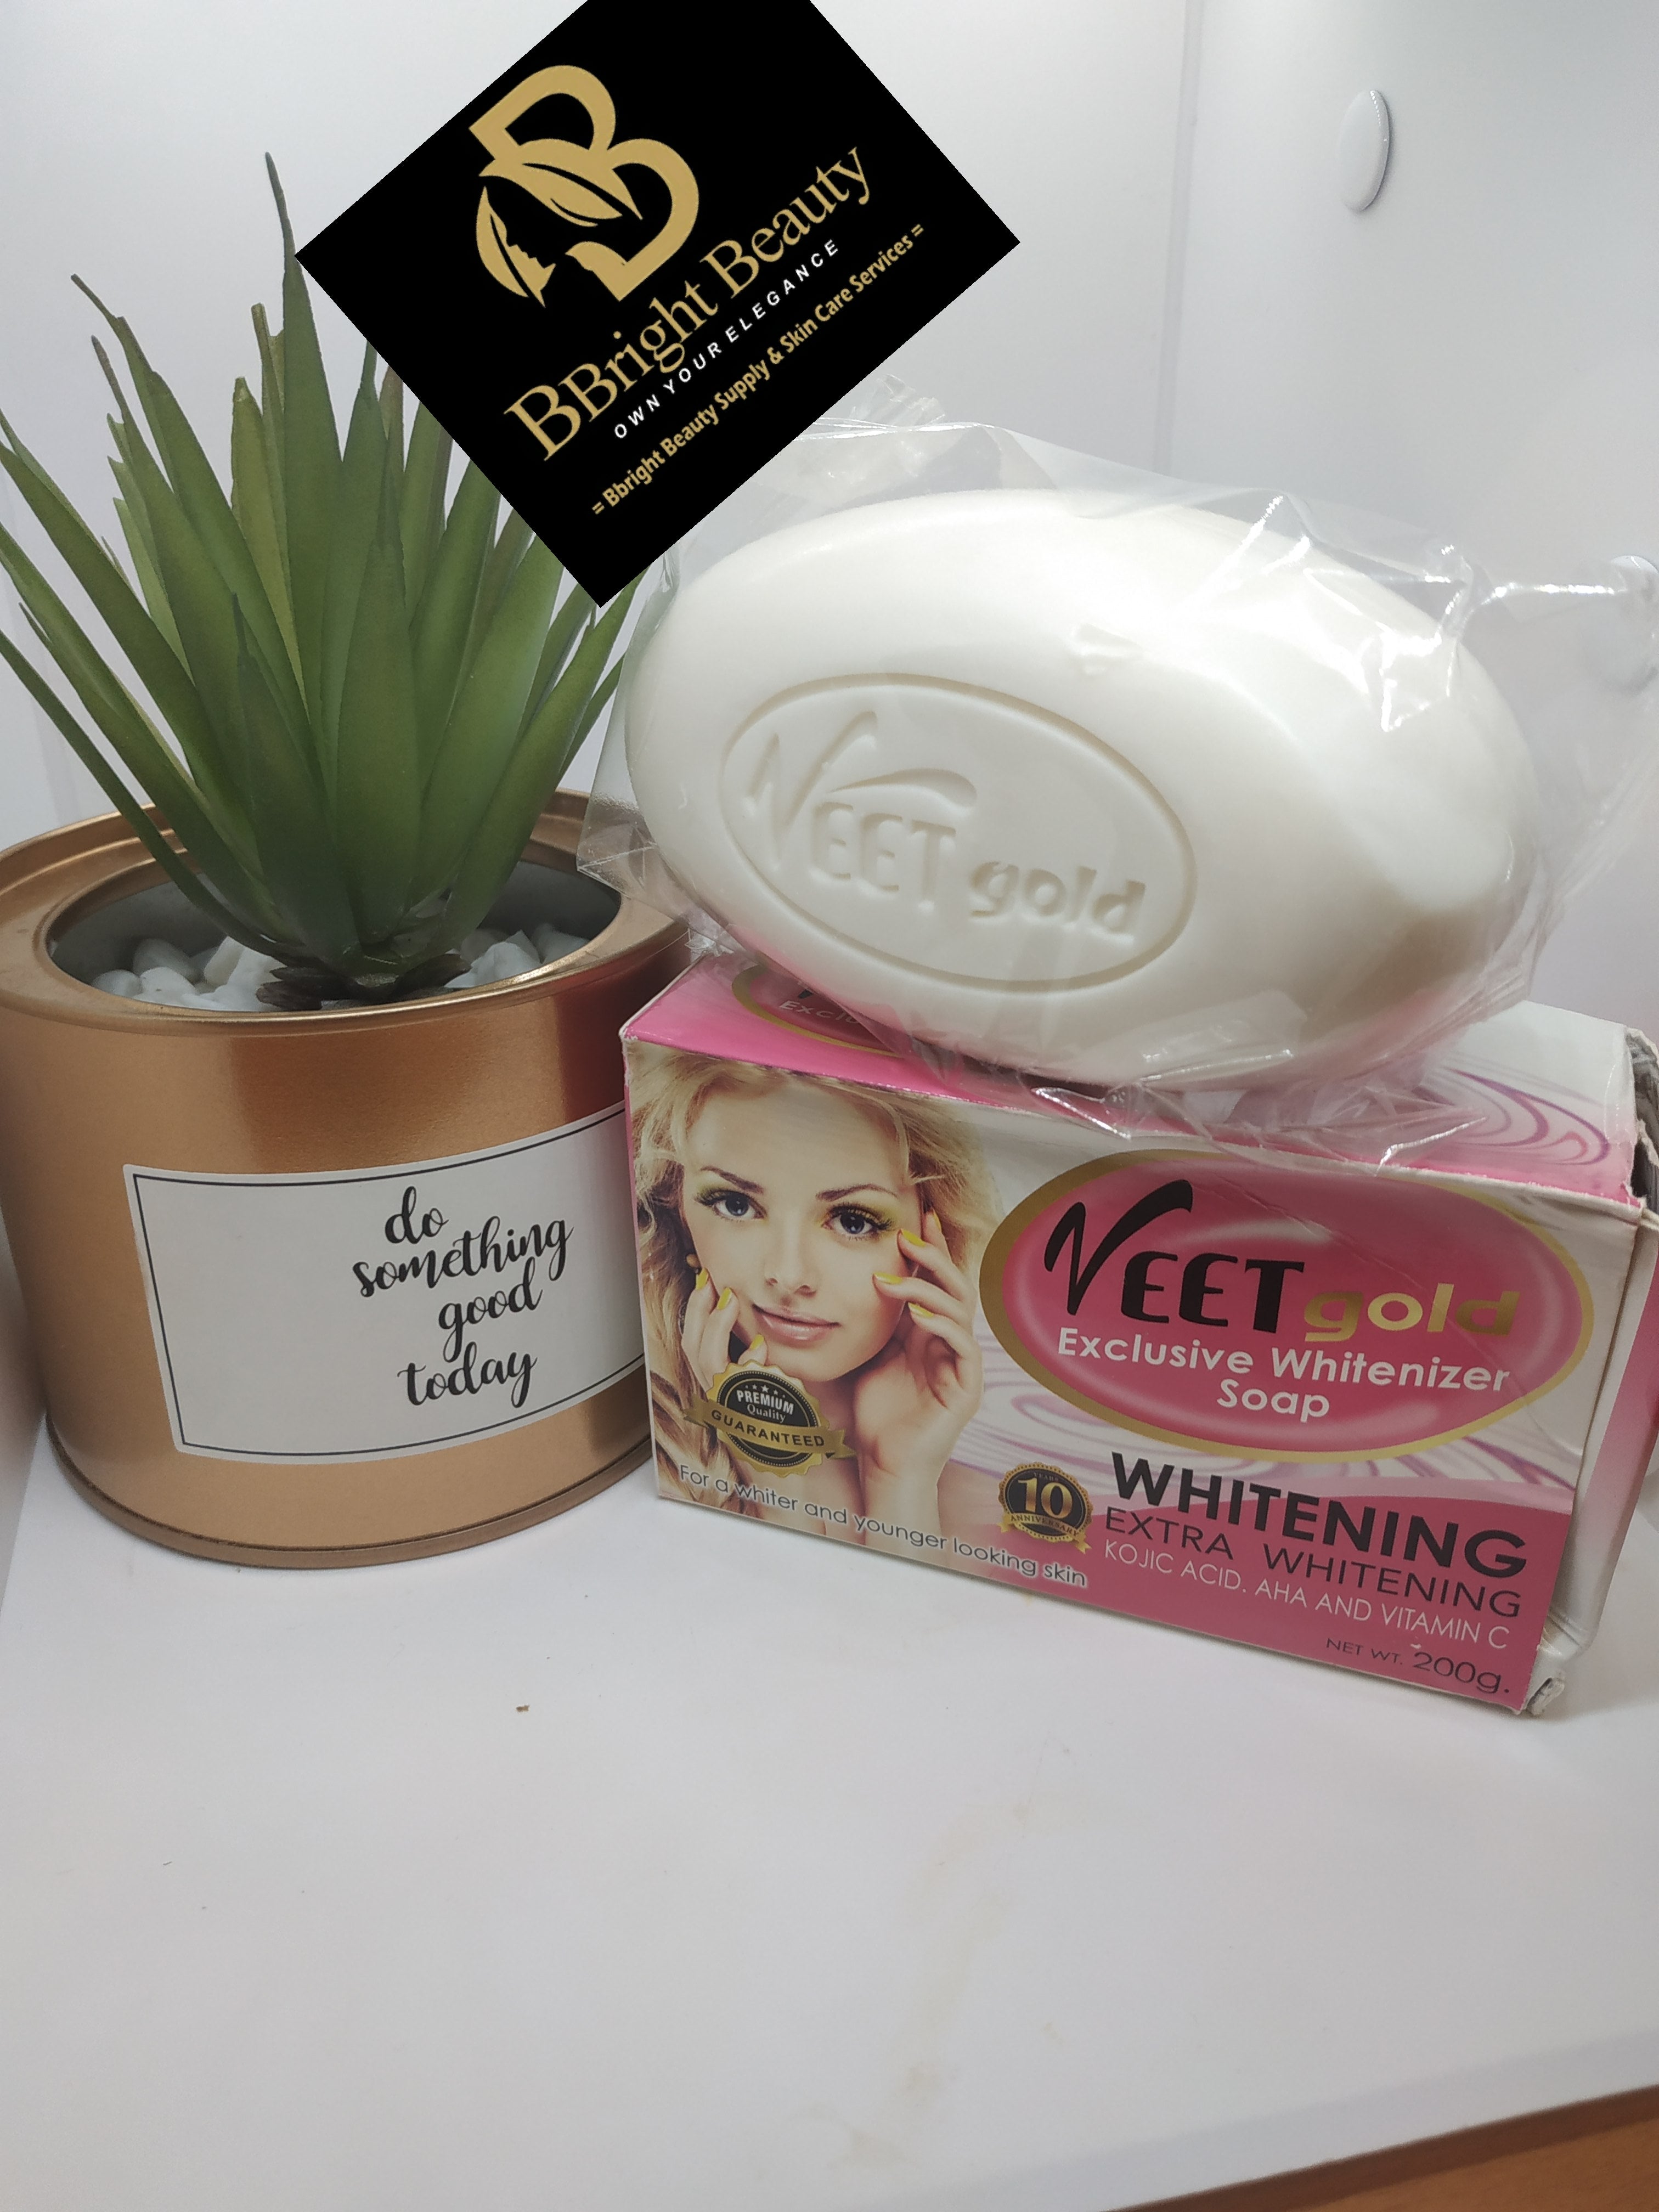 Veet Gold Exclusive Whitenizer Soap with Kojic Acid,AHA,Vitamin C 200g